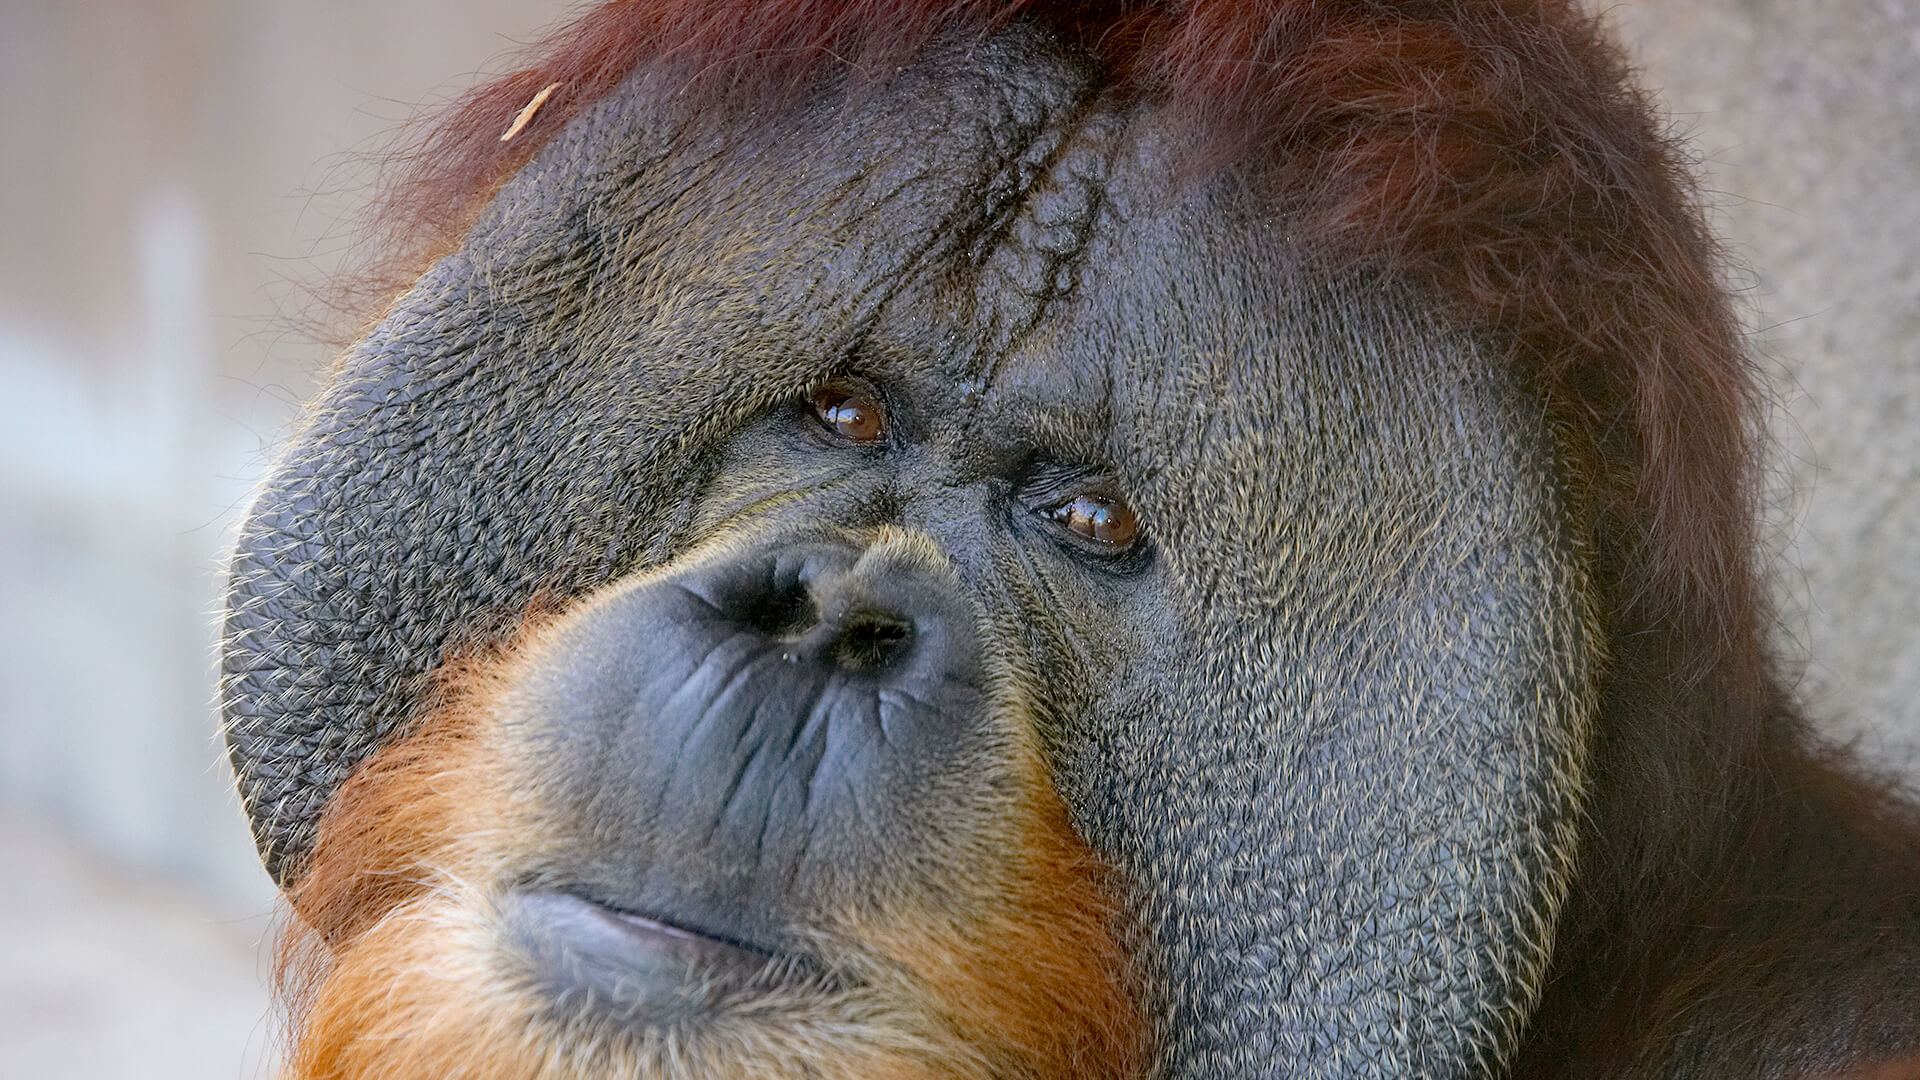 Sumatran orangutan male with cheek pads